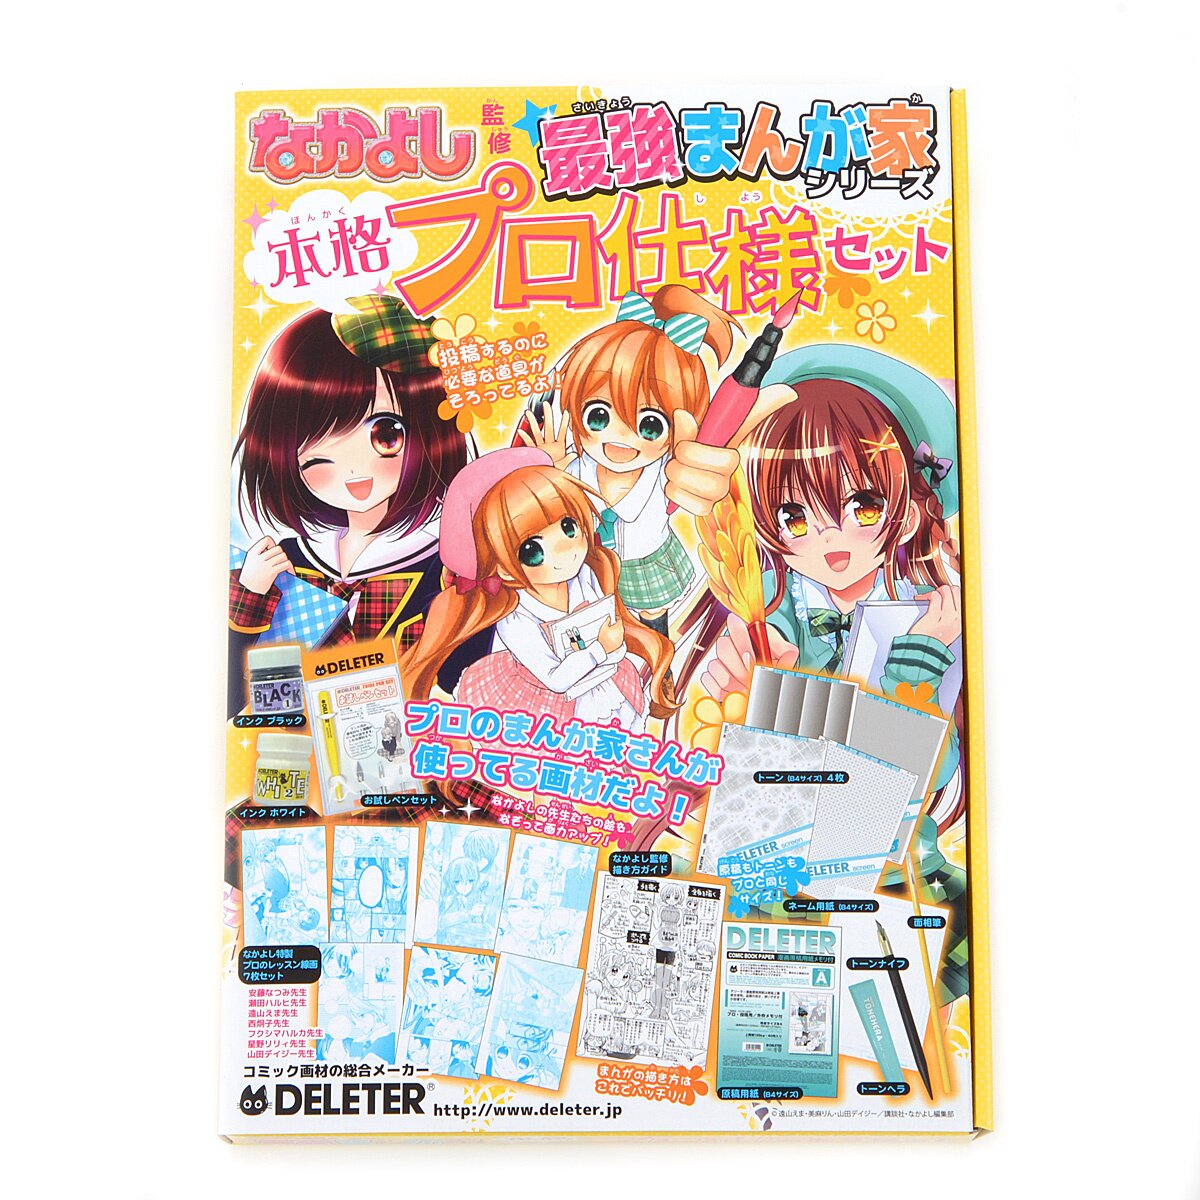 Deleter Nakayoshi Saikyo Mangaka Series: Deleter - Tokyo Otaku Mode (TOM)